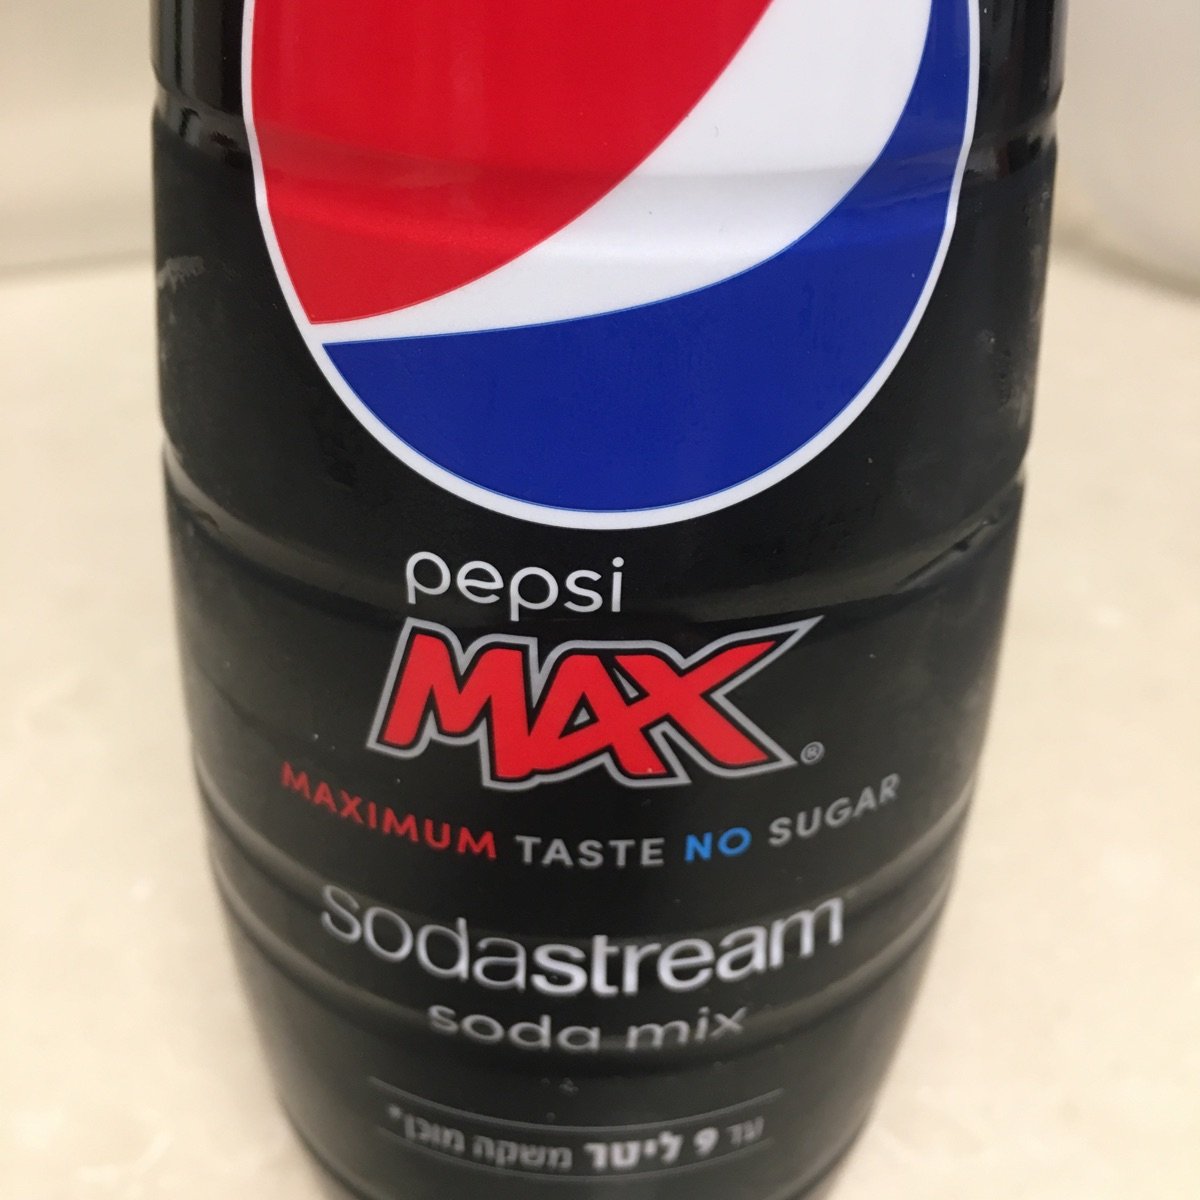 PepsiCo Pepsi max sodastream soda mix Reviews